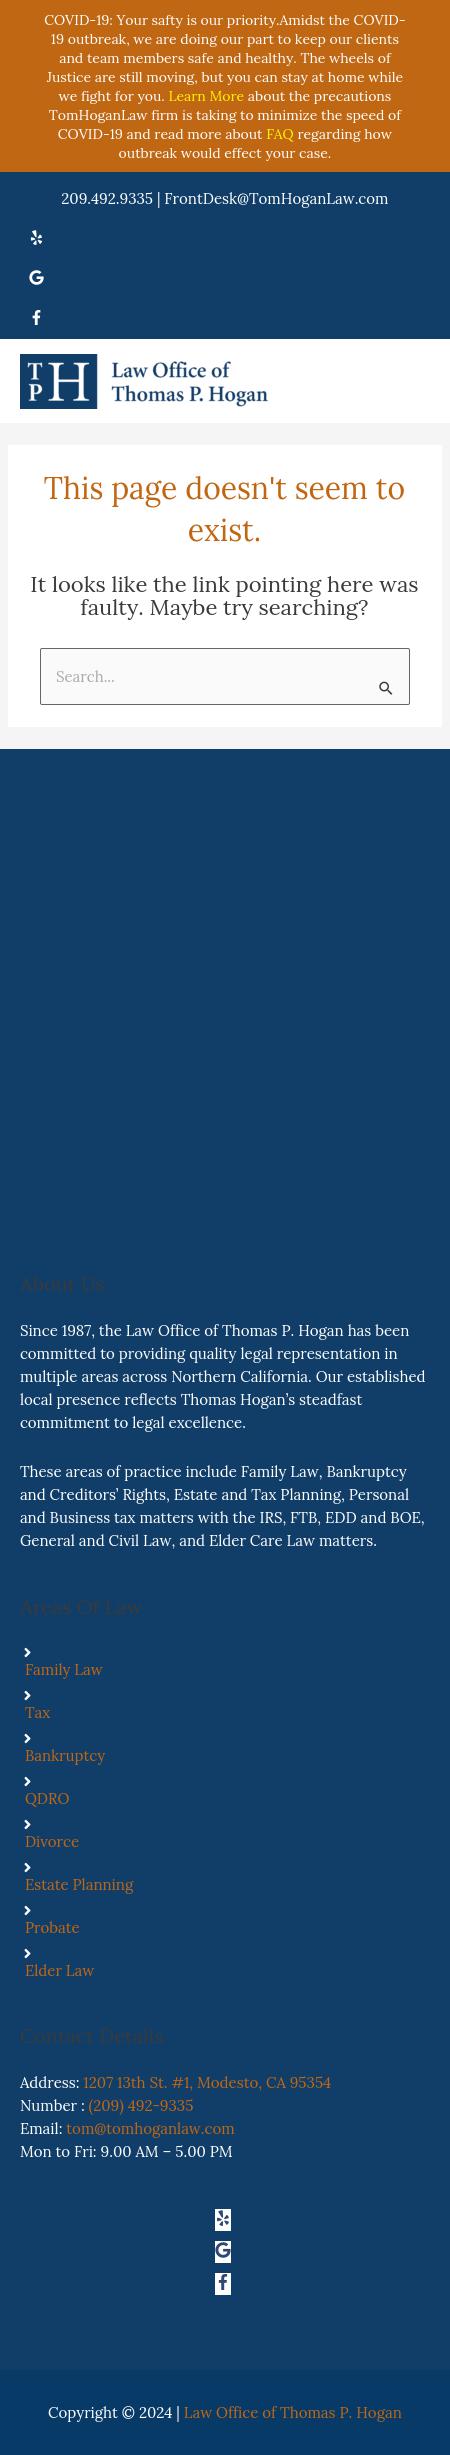 Law Offices of Thomas P. Hogan - Modesto CA Lawyers